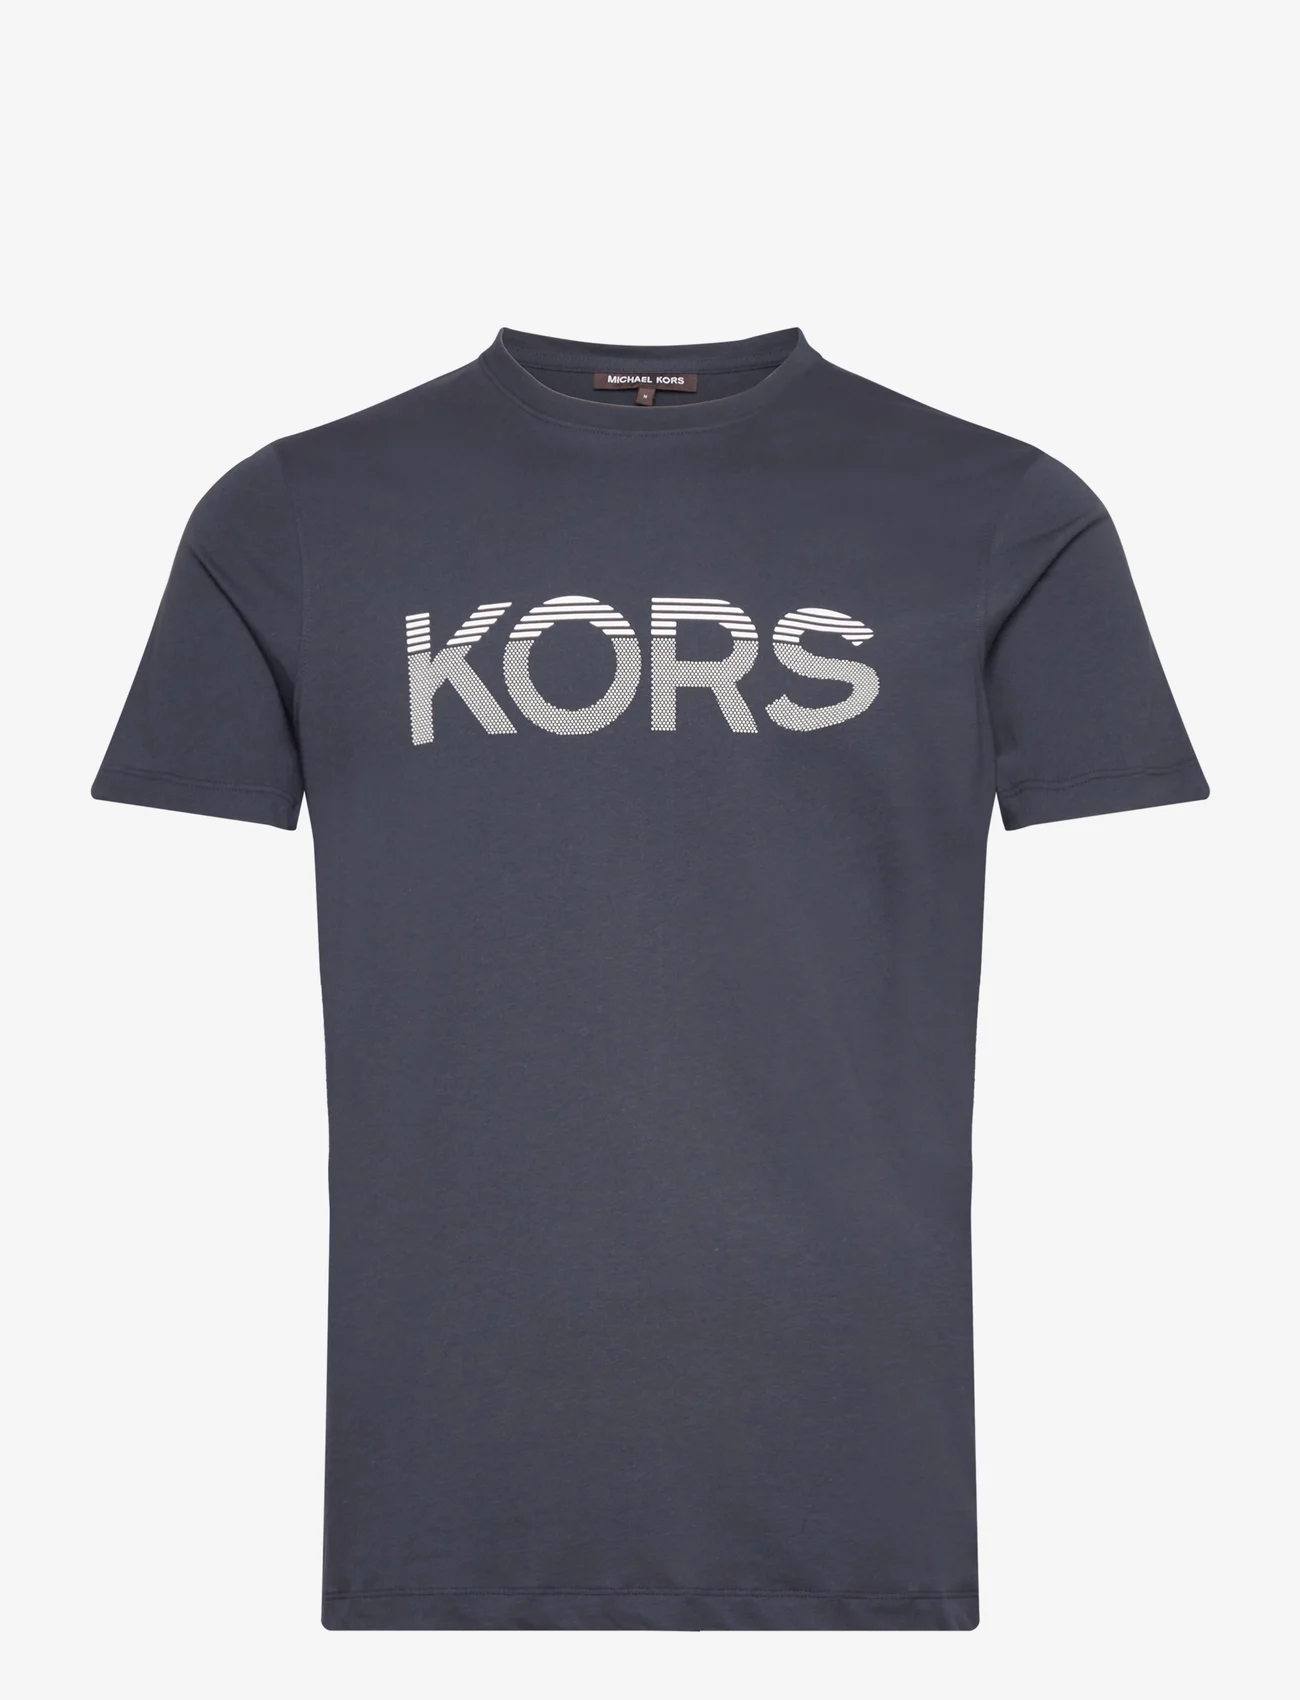 Michael Kors - TIPPED KORS TEE - kortærmede t-shirts - midnight - 0